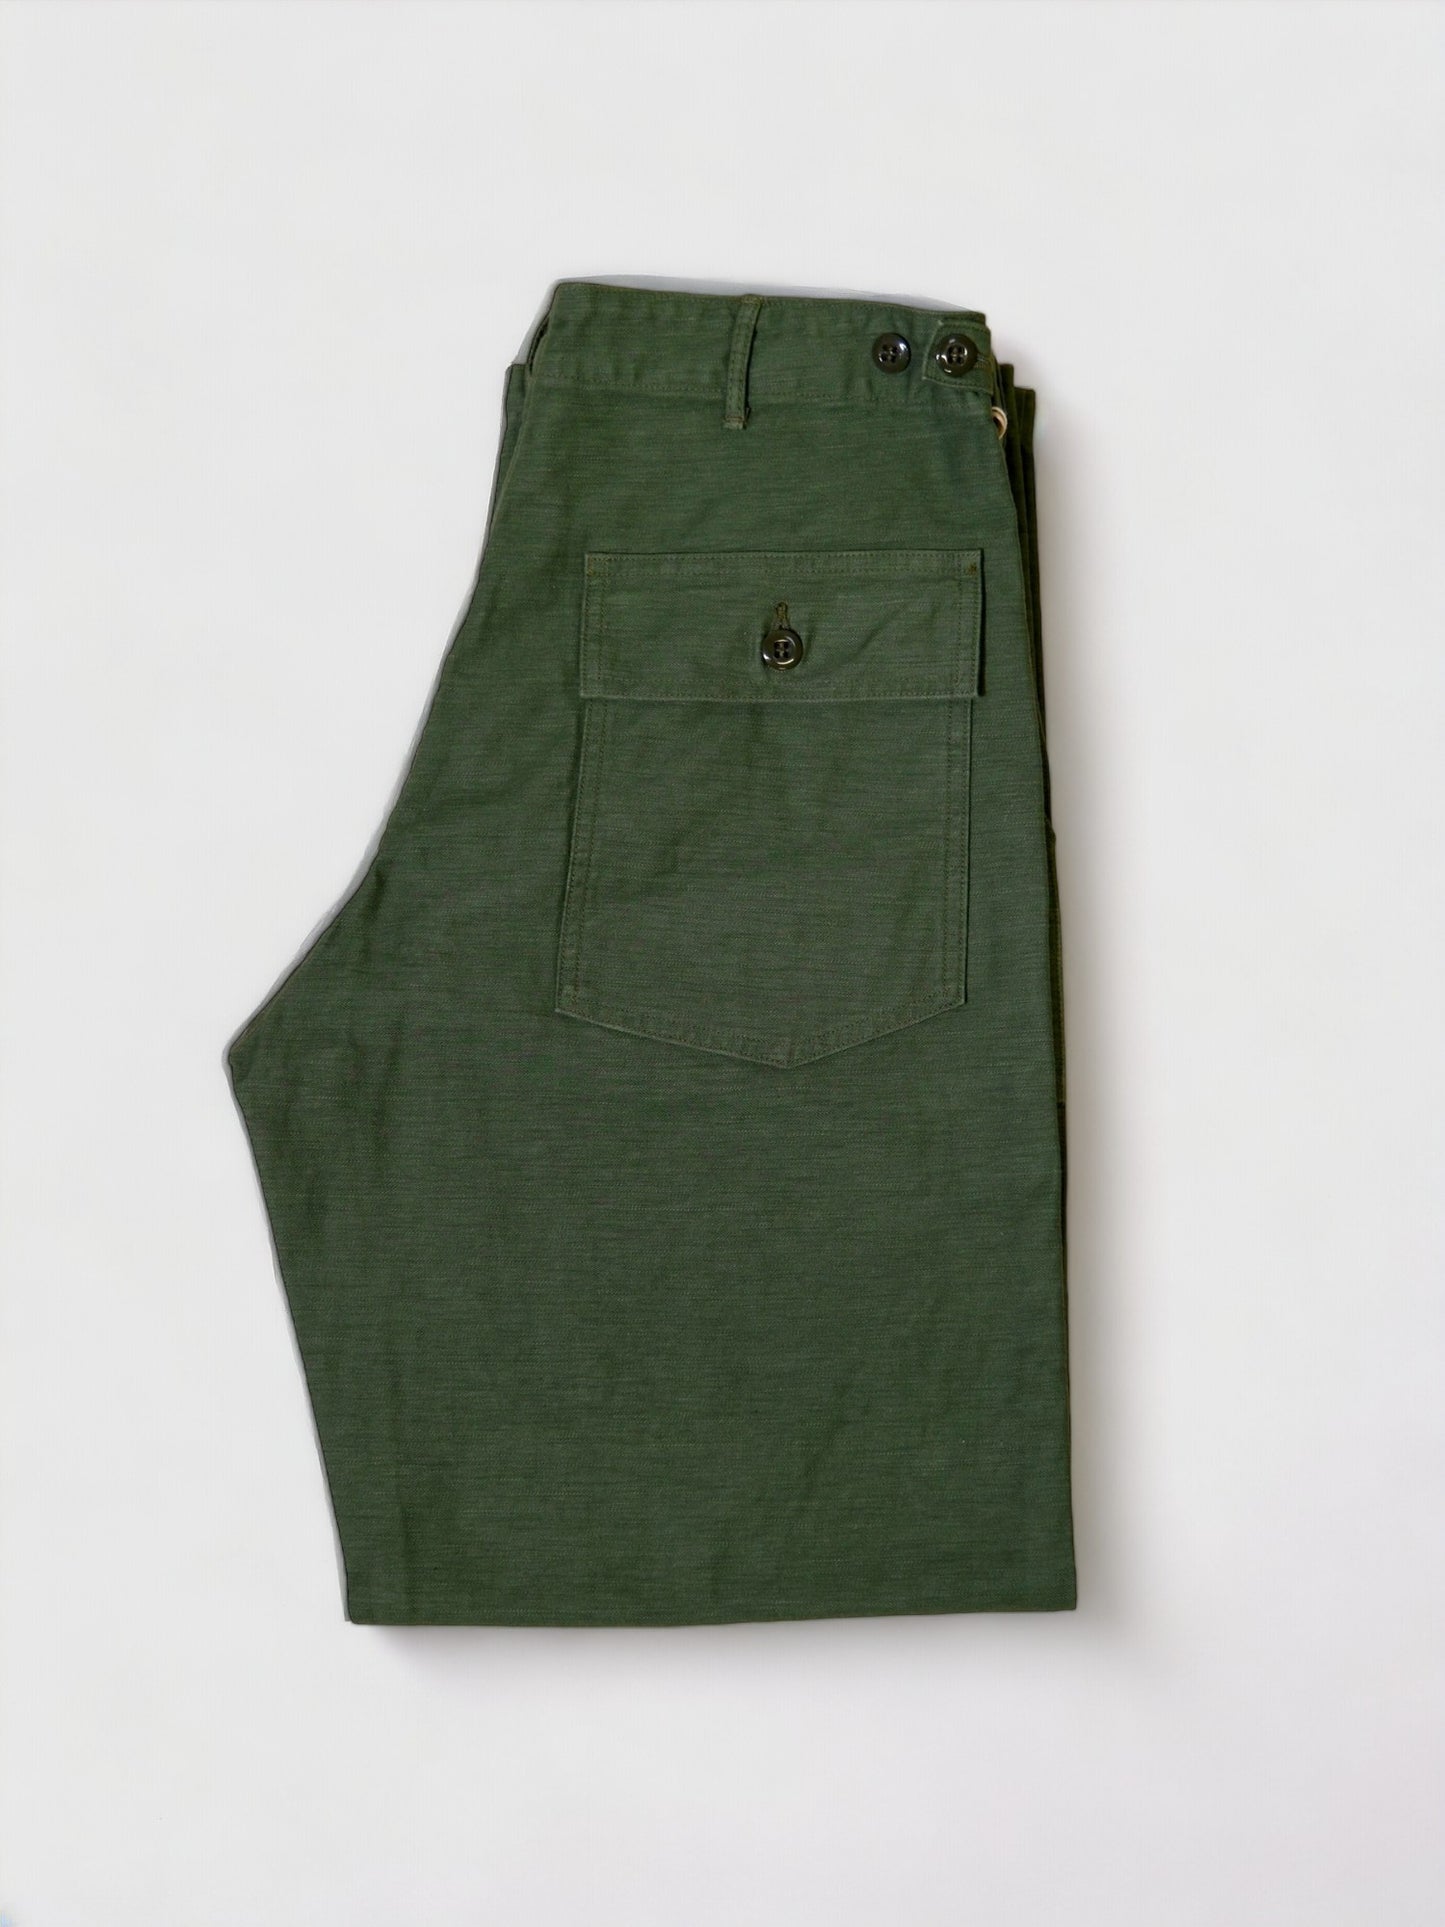 US Army Fatigue Pants Standard (Regular Fit)